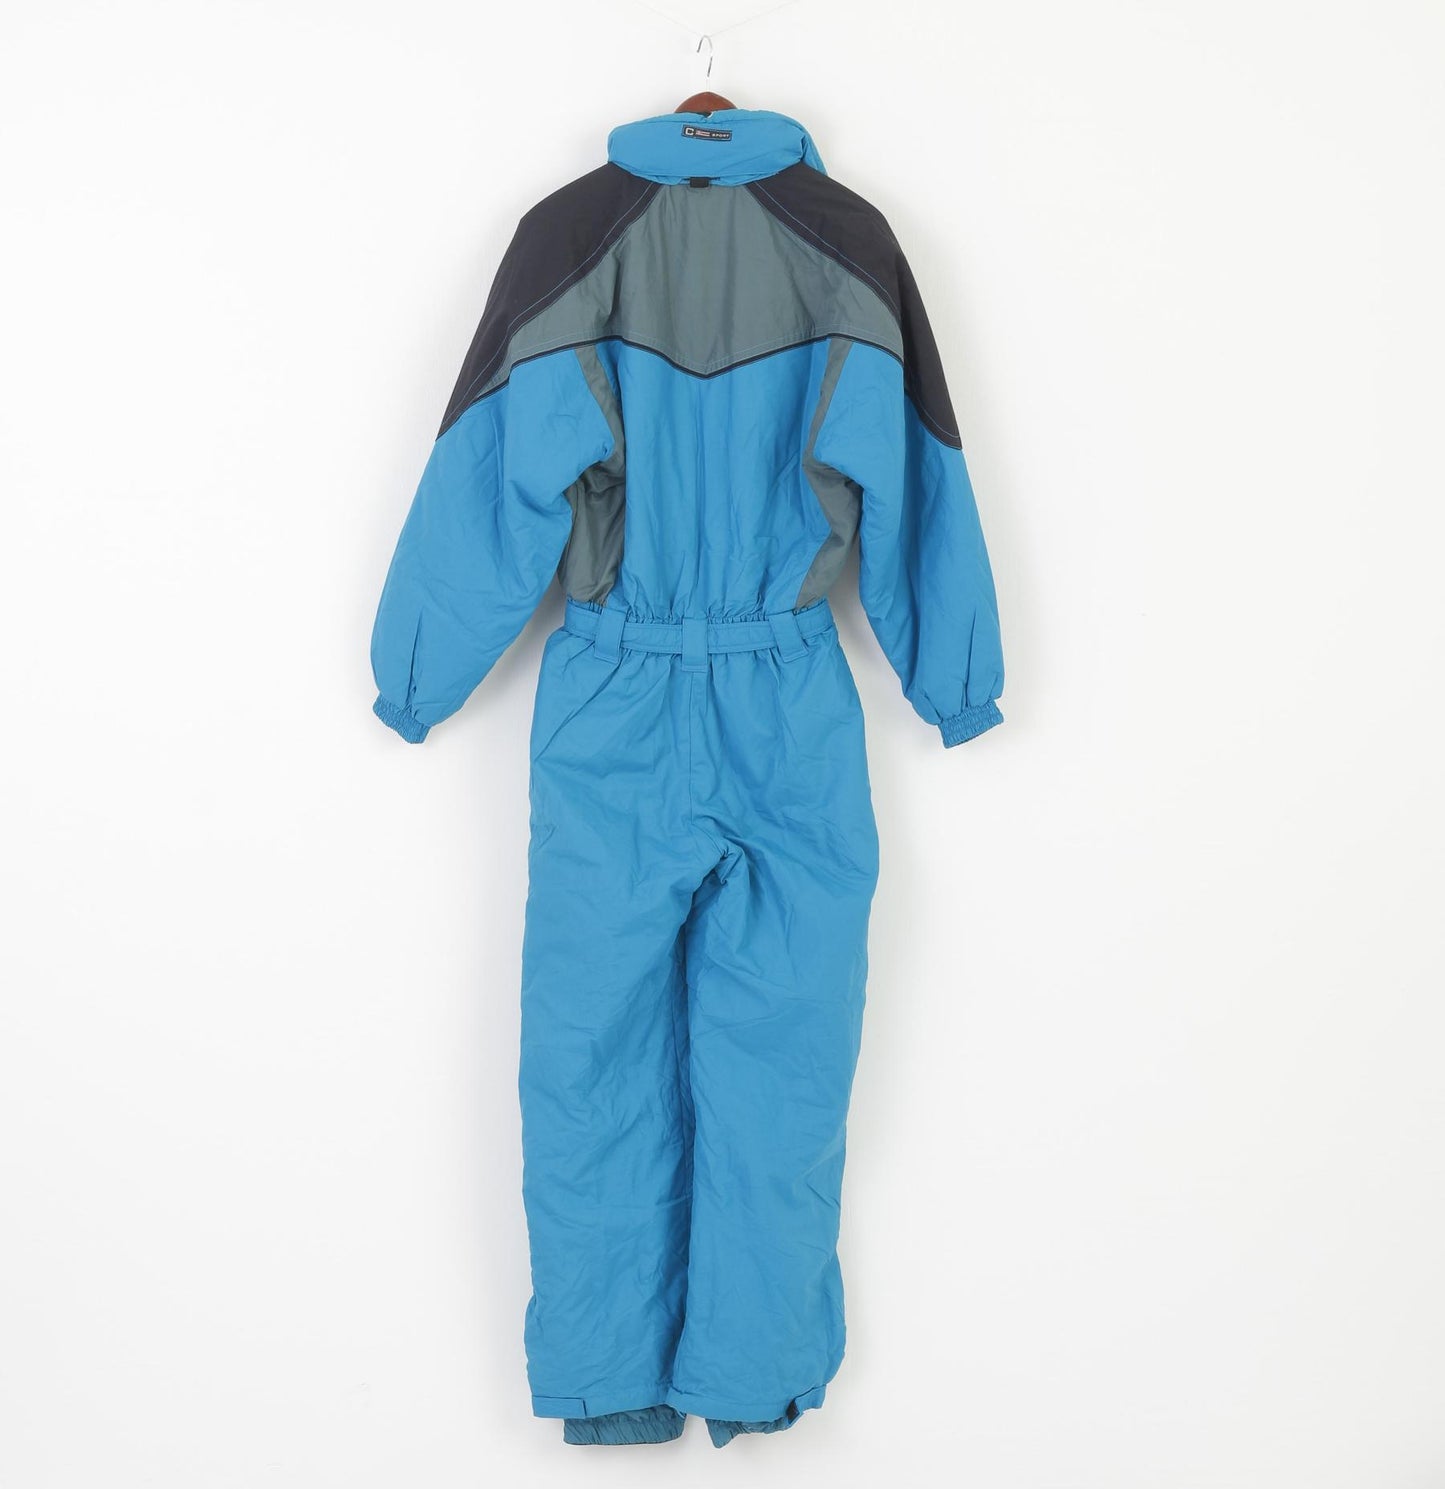 Calmo Sportswear Women L Ski Suit Blue Vintage Nylon Hood Snowboard Snowsuit